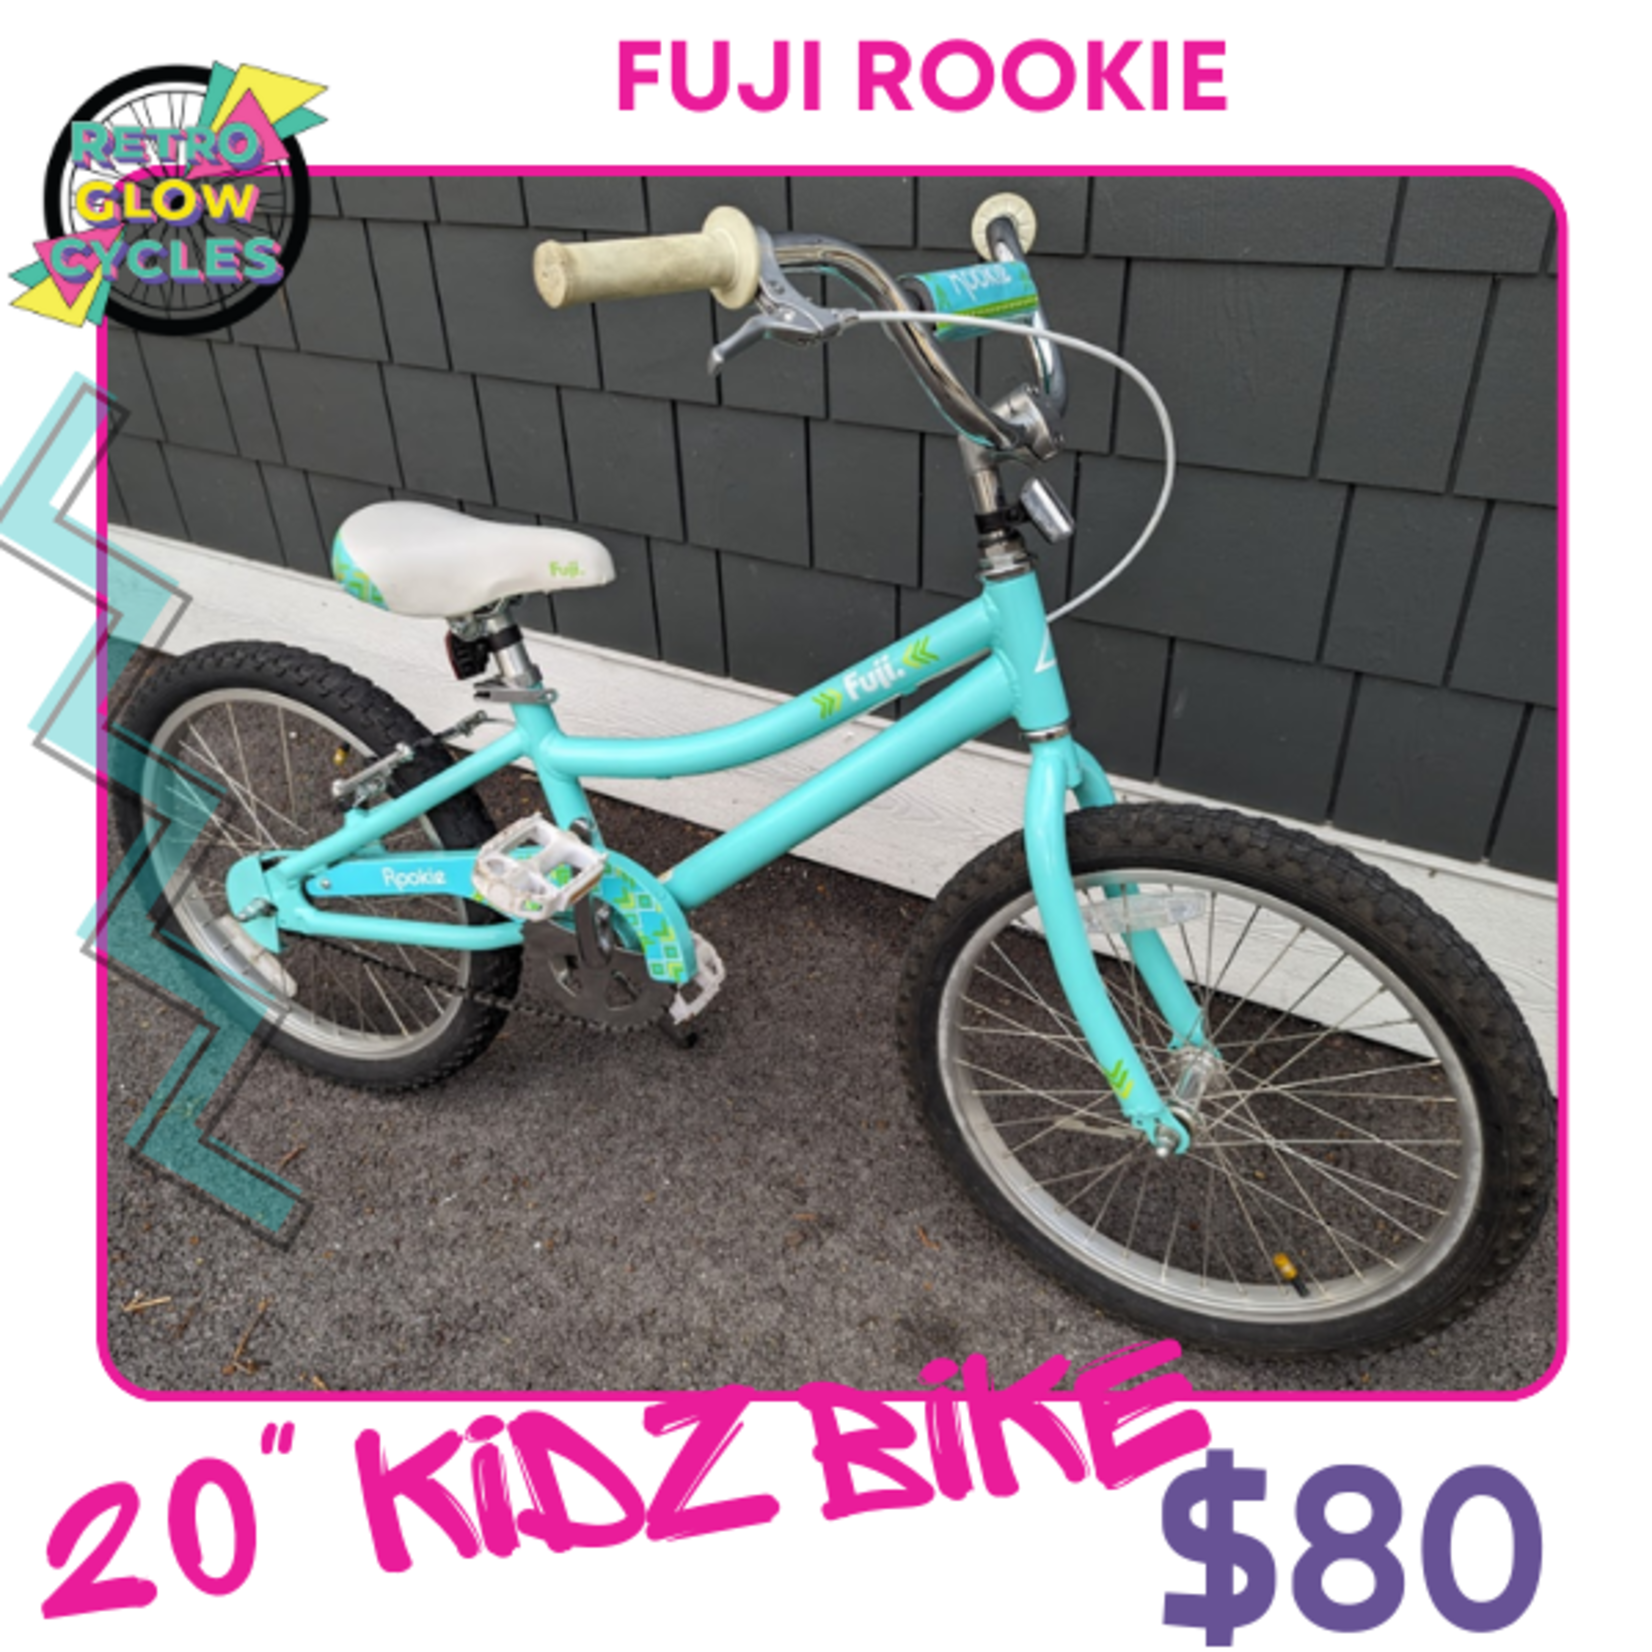 Fuji Fuji Rookie 20" Bike